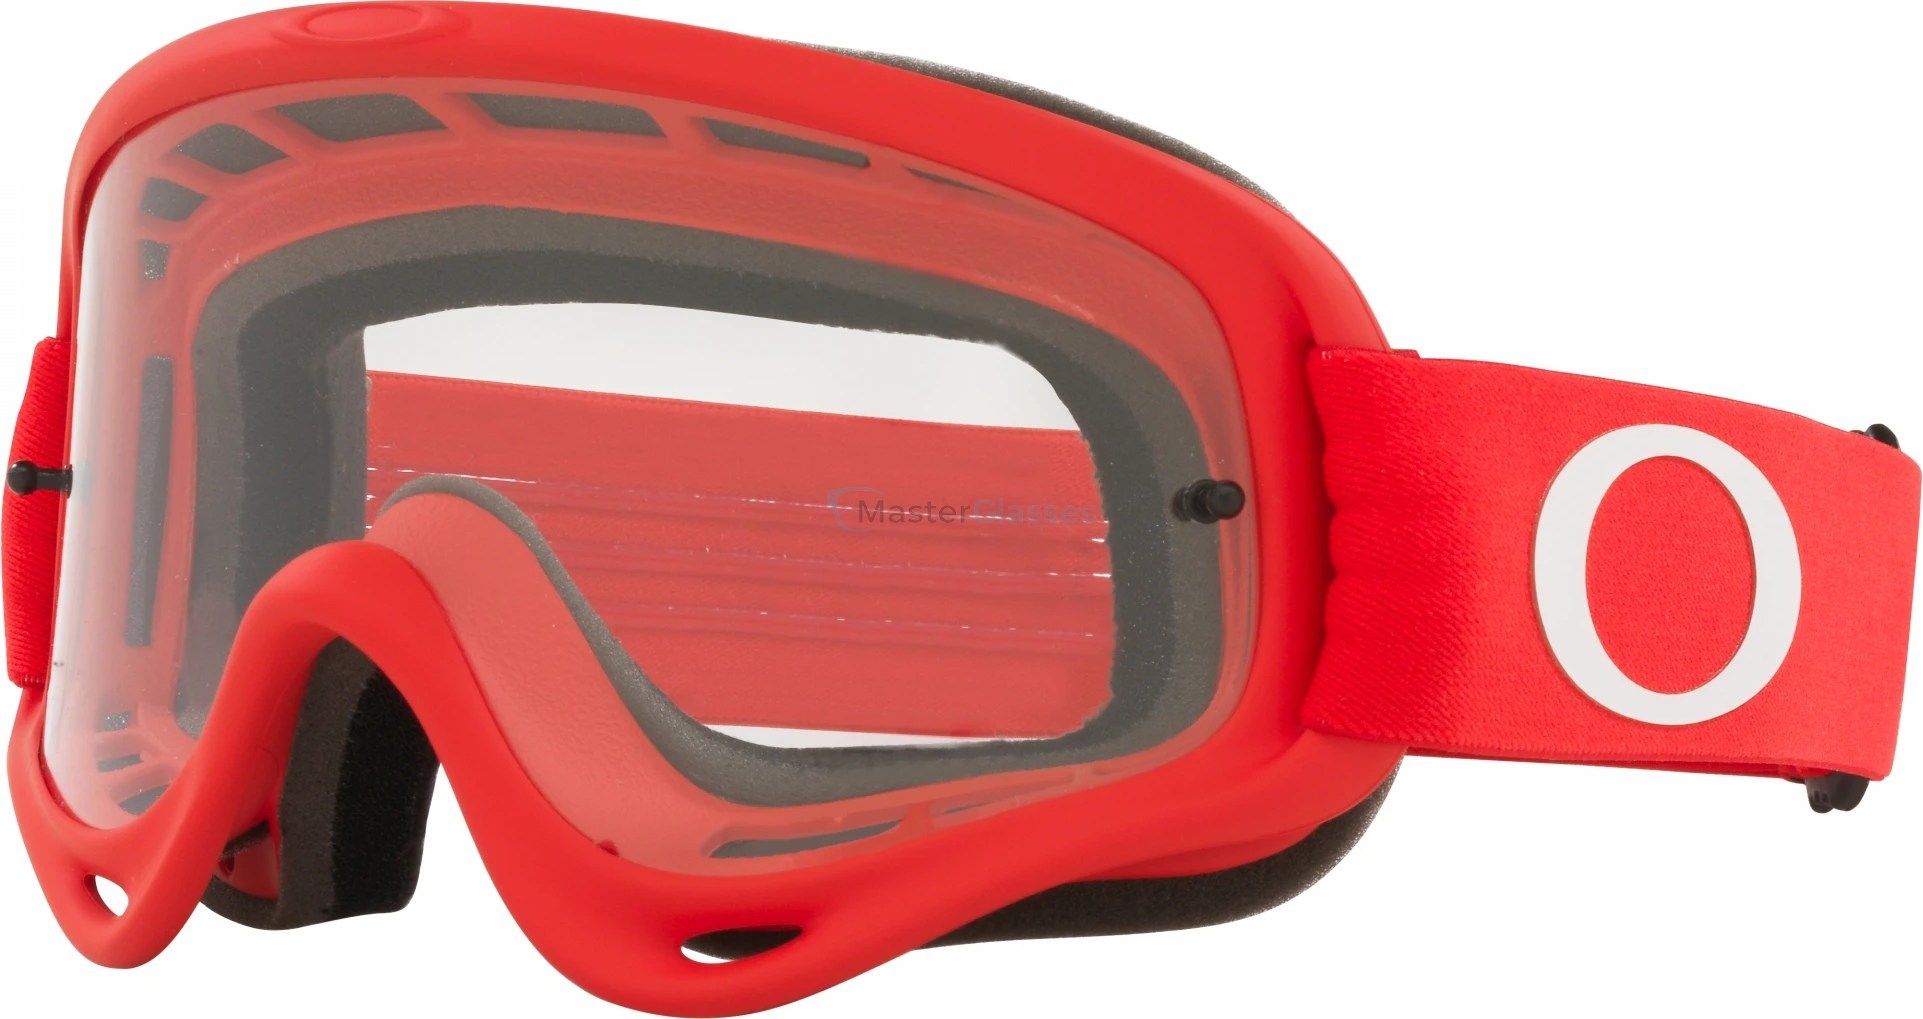    Oakley mx goggles O-frame Mx OO7029 702963 Moto Red